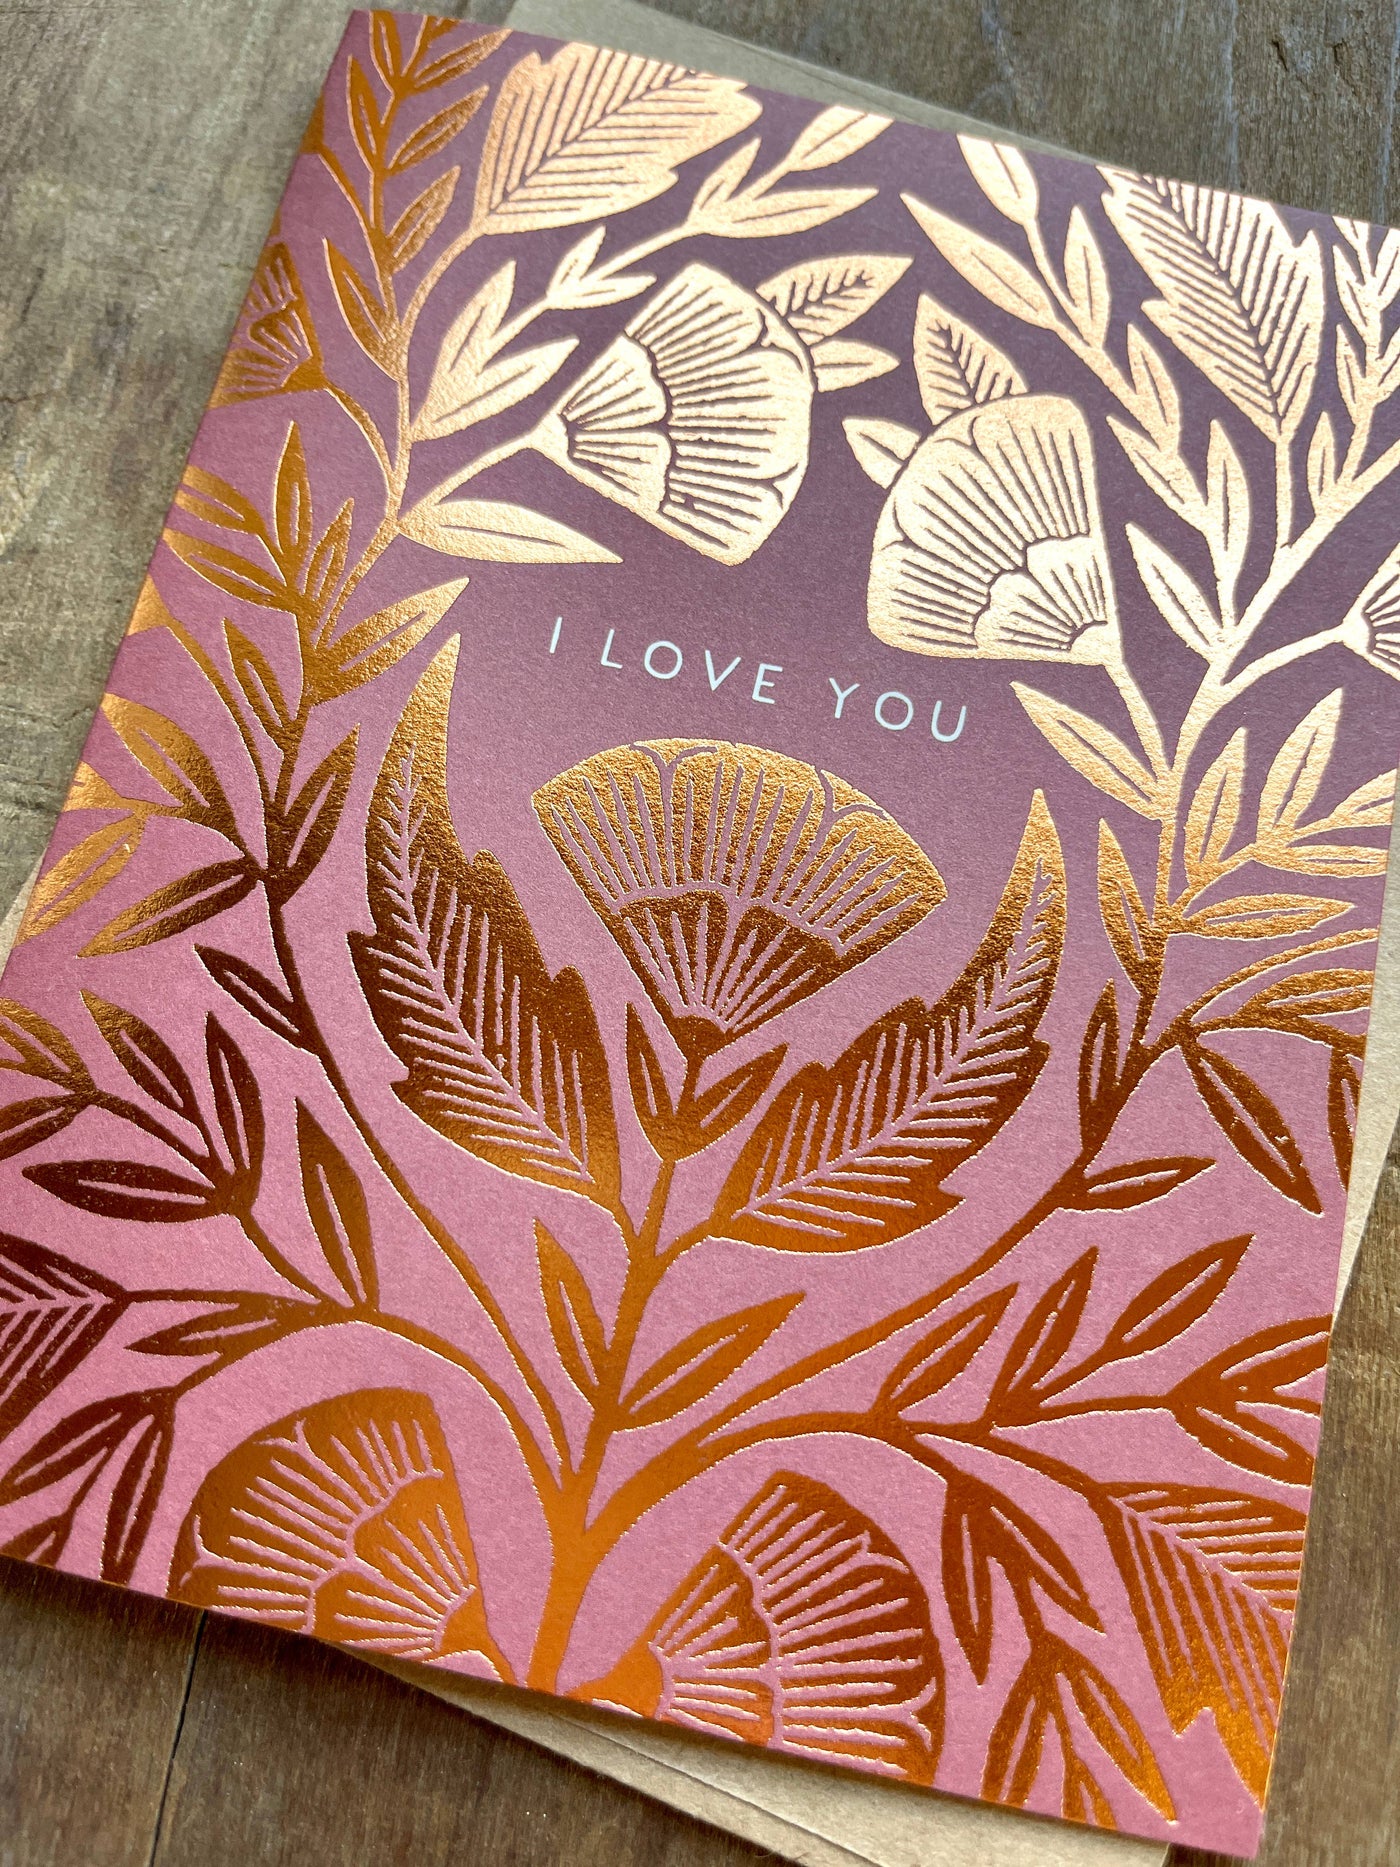 "I Love You" Foil Stamped Card